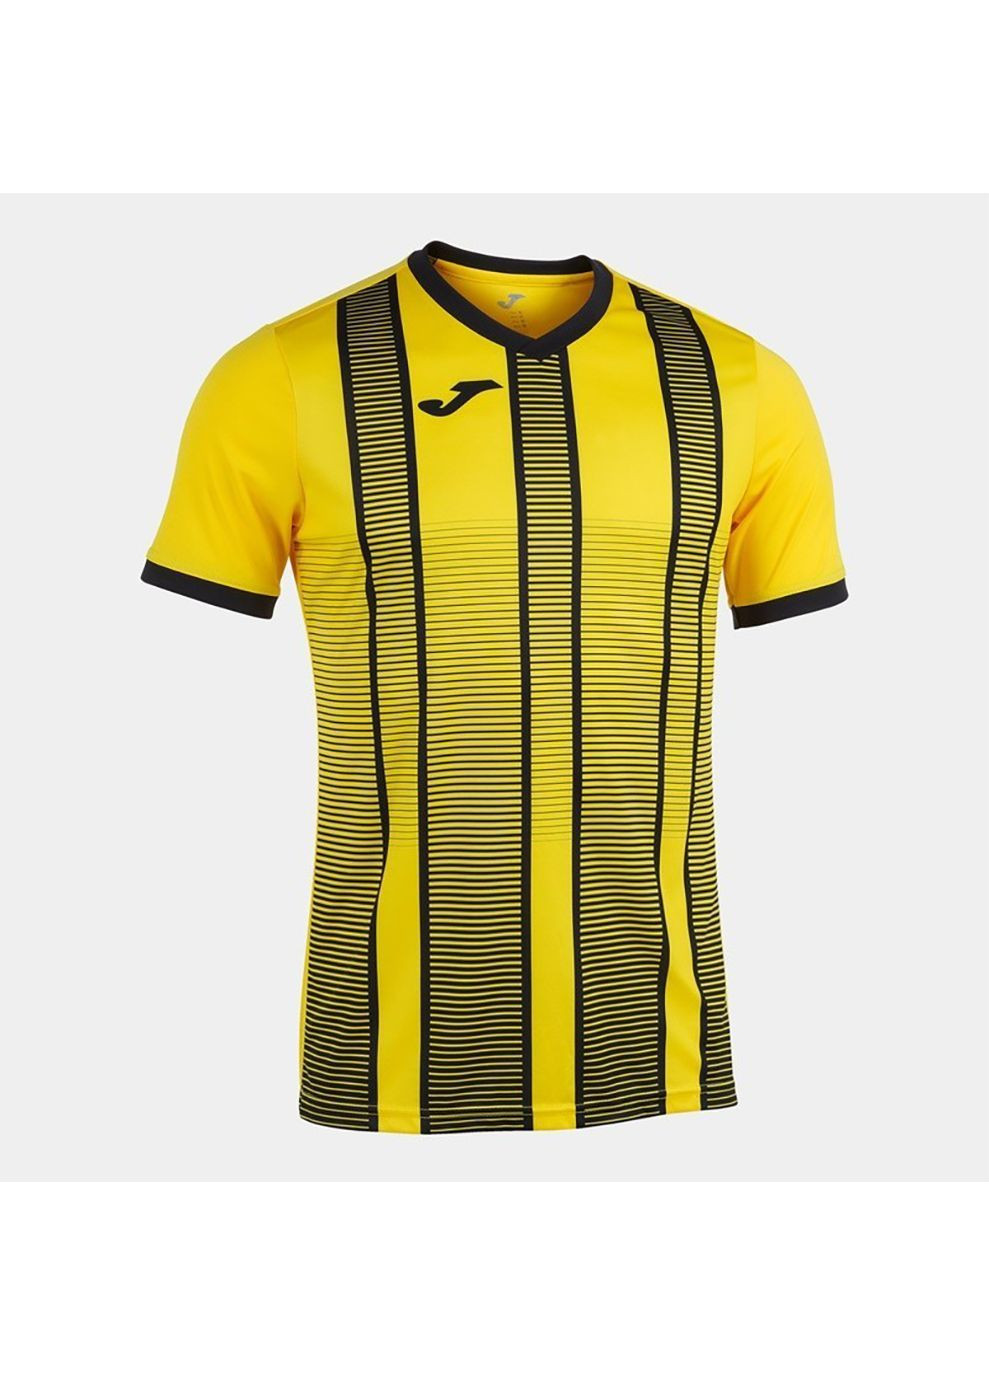 Жовта футболка tiger ii жовтий Joma